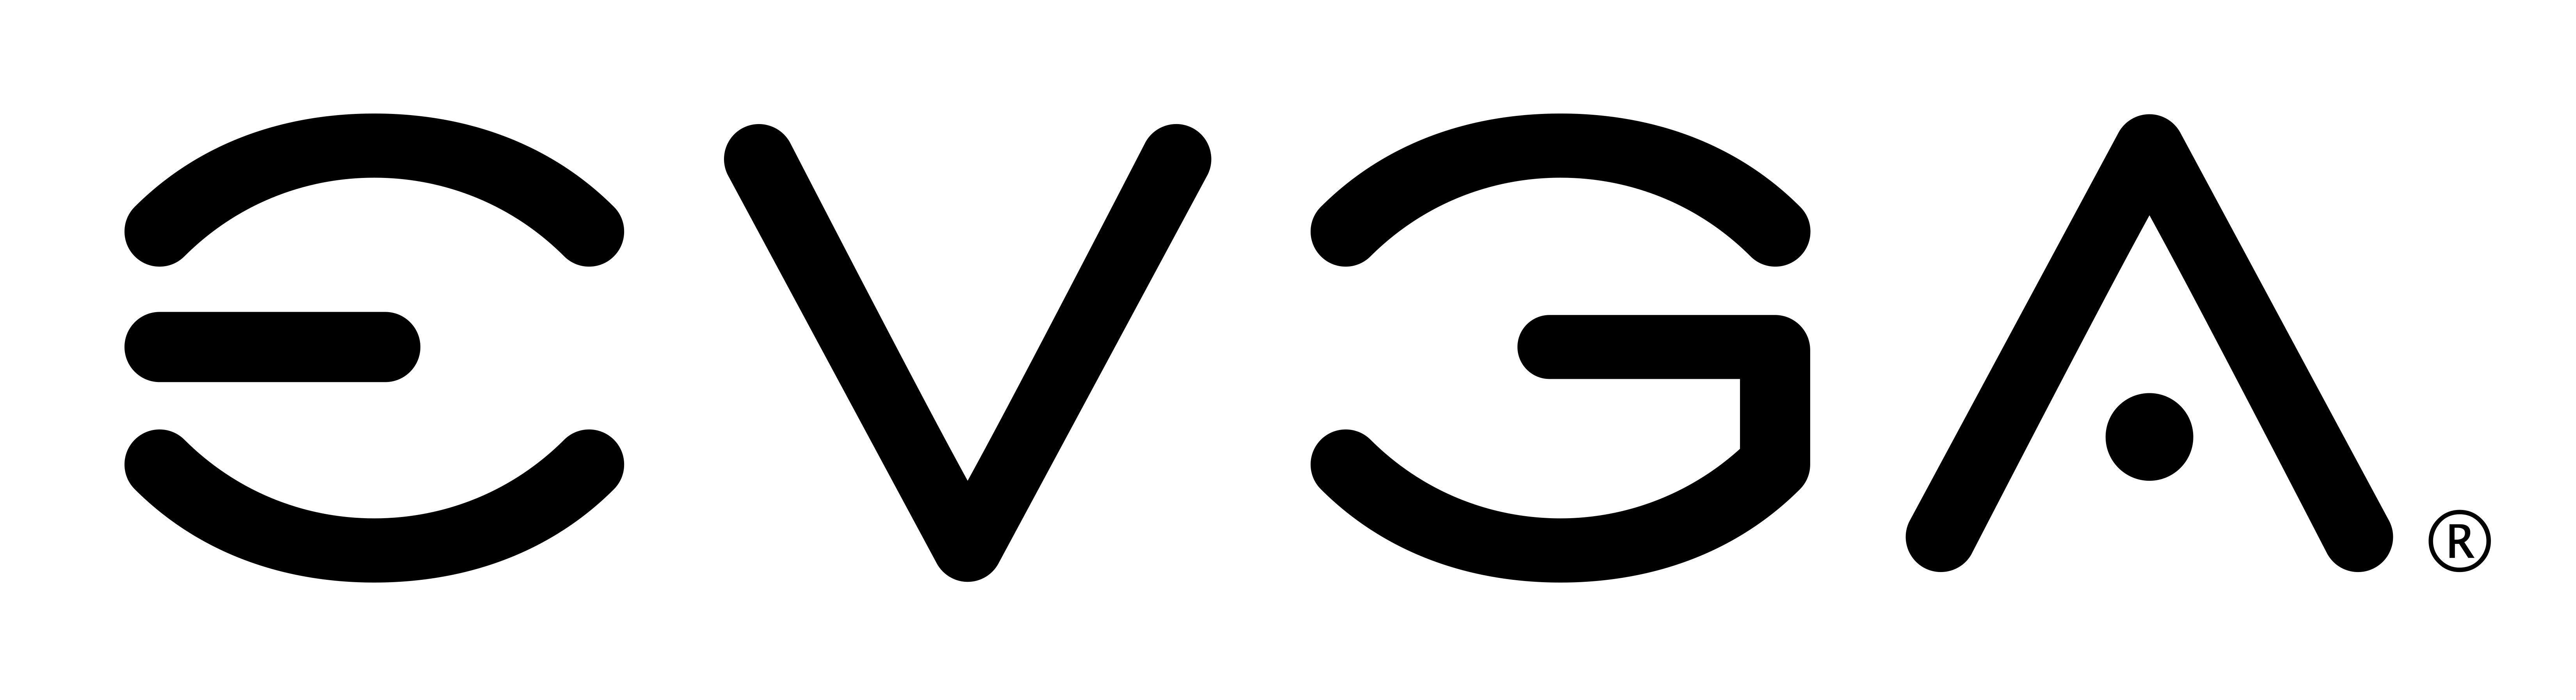 Intelligent Black and White Logo - EVGA - Intelligent Innovation - Marketing